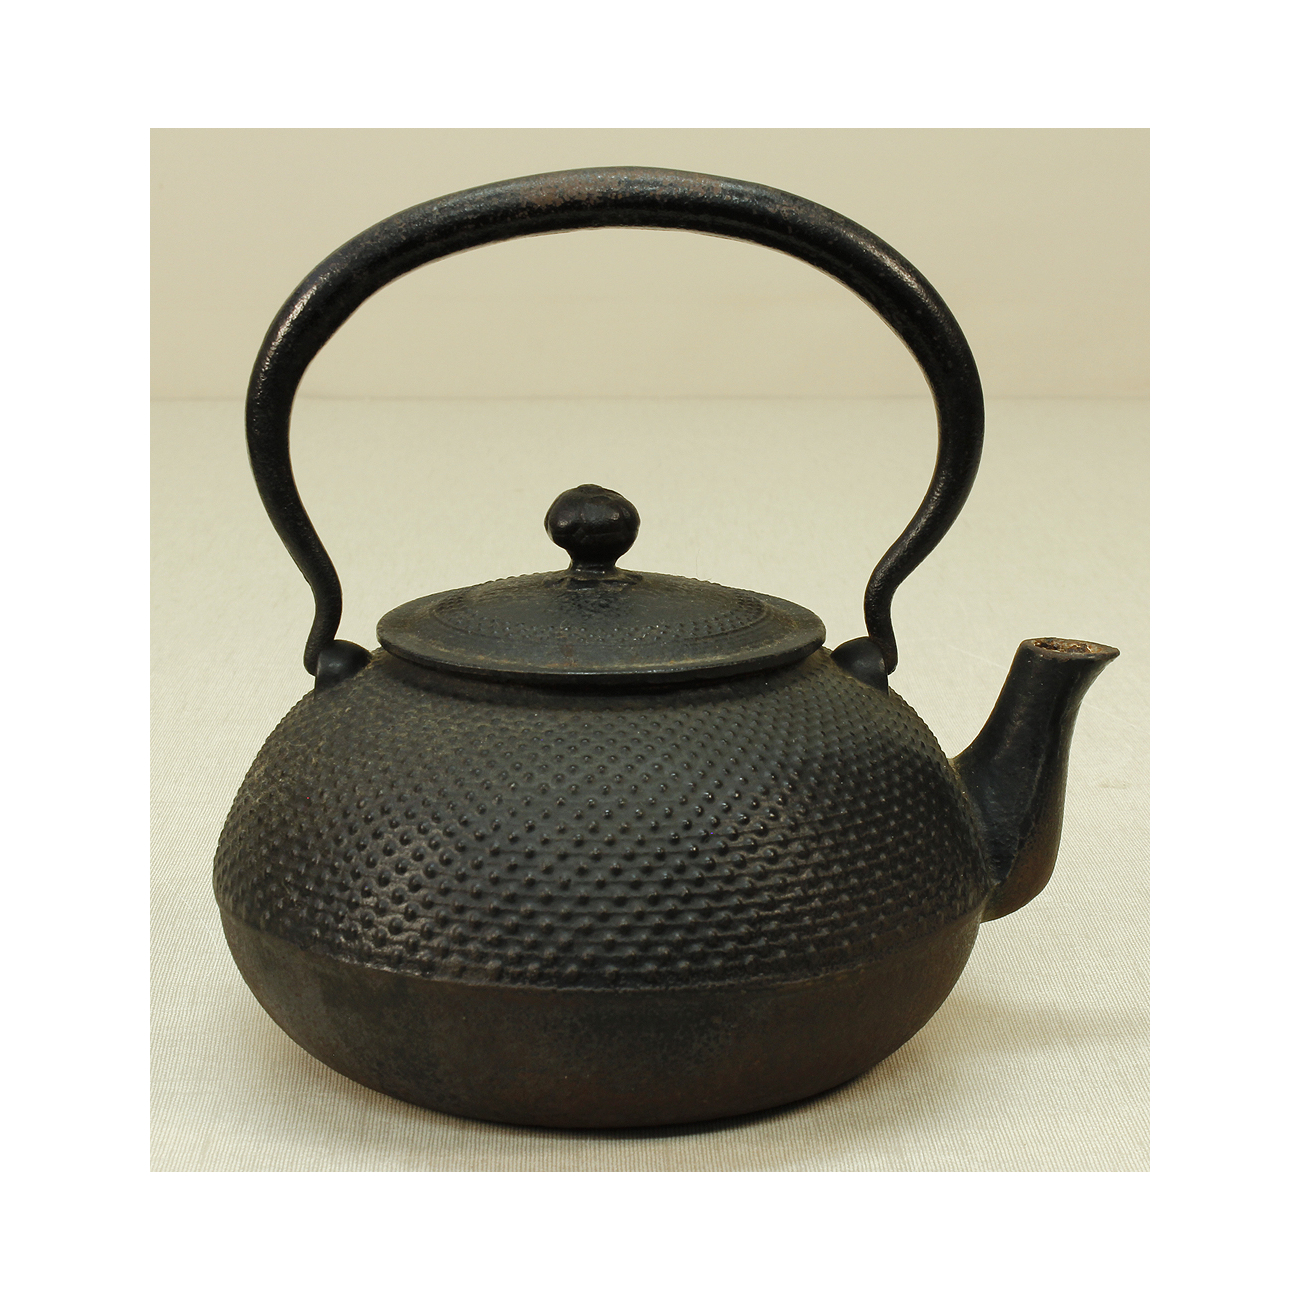 Japanese vintage teapot TT-2